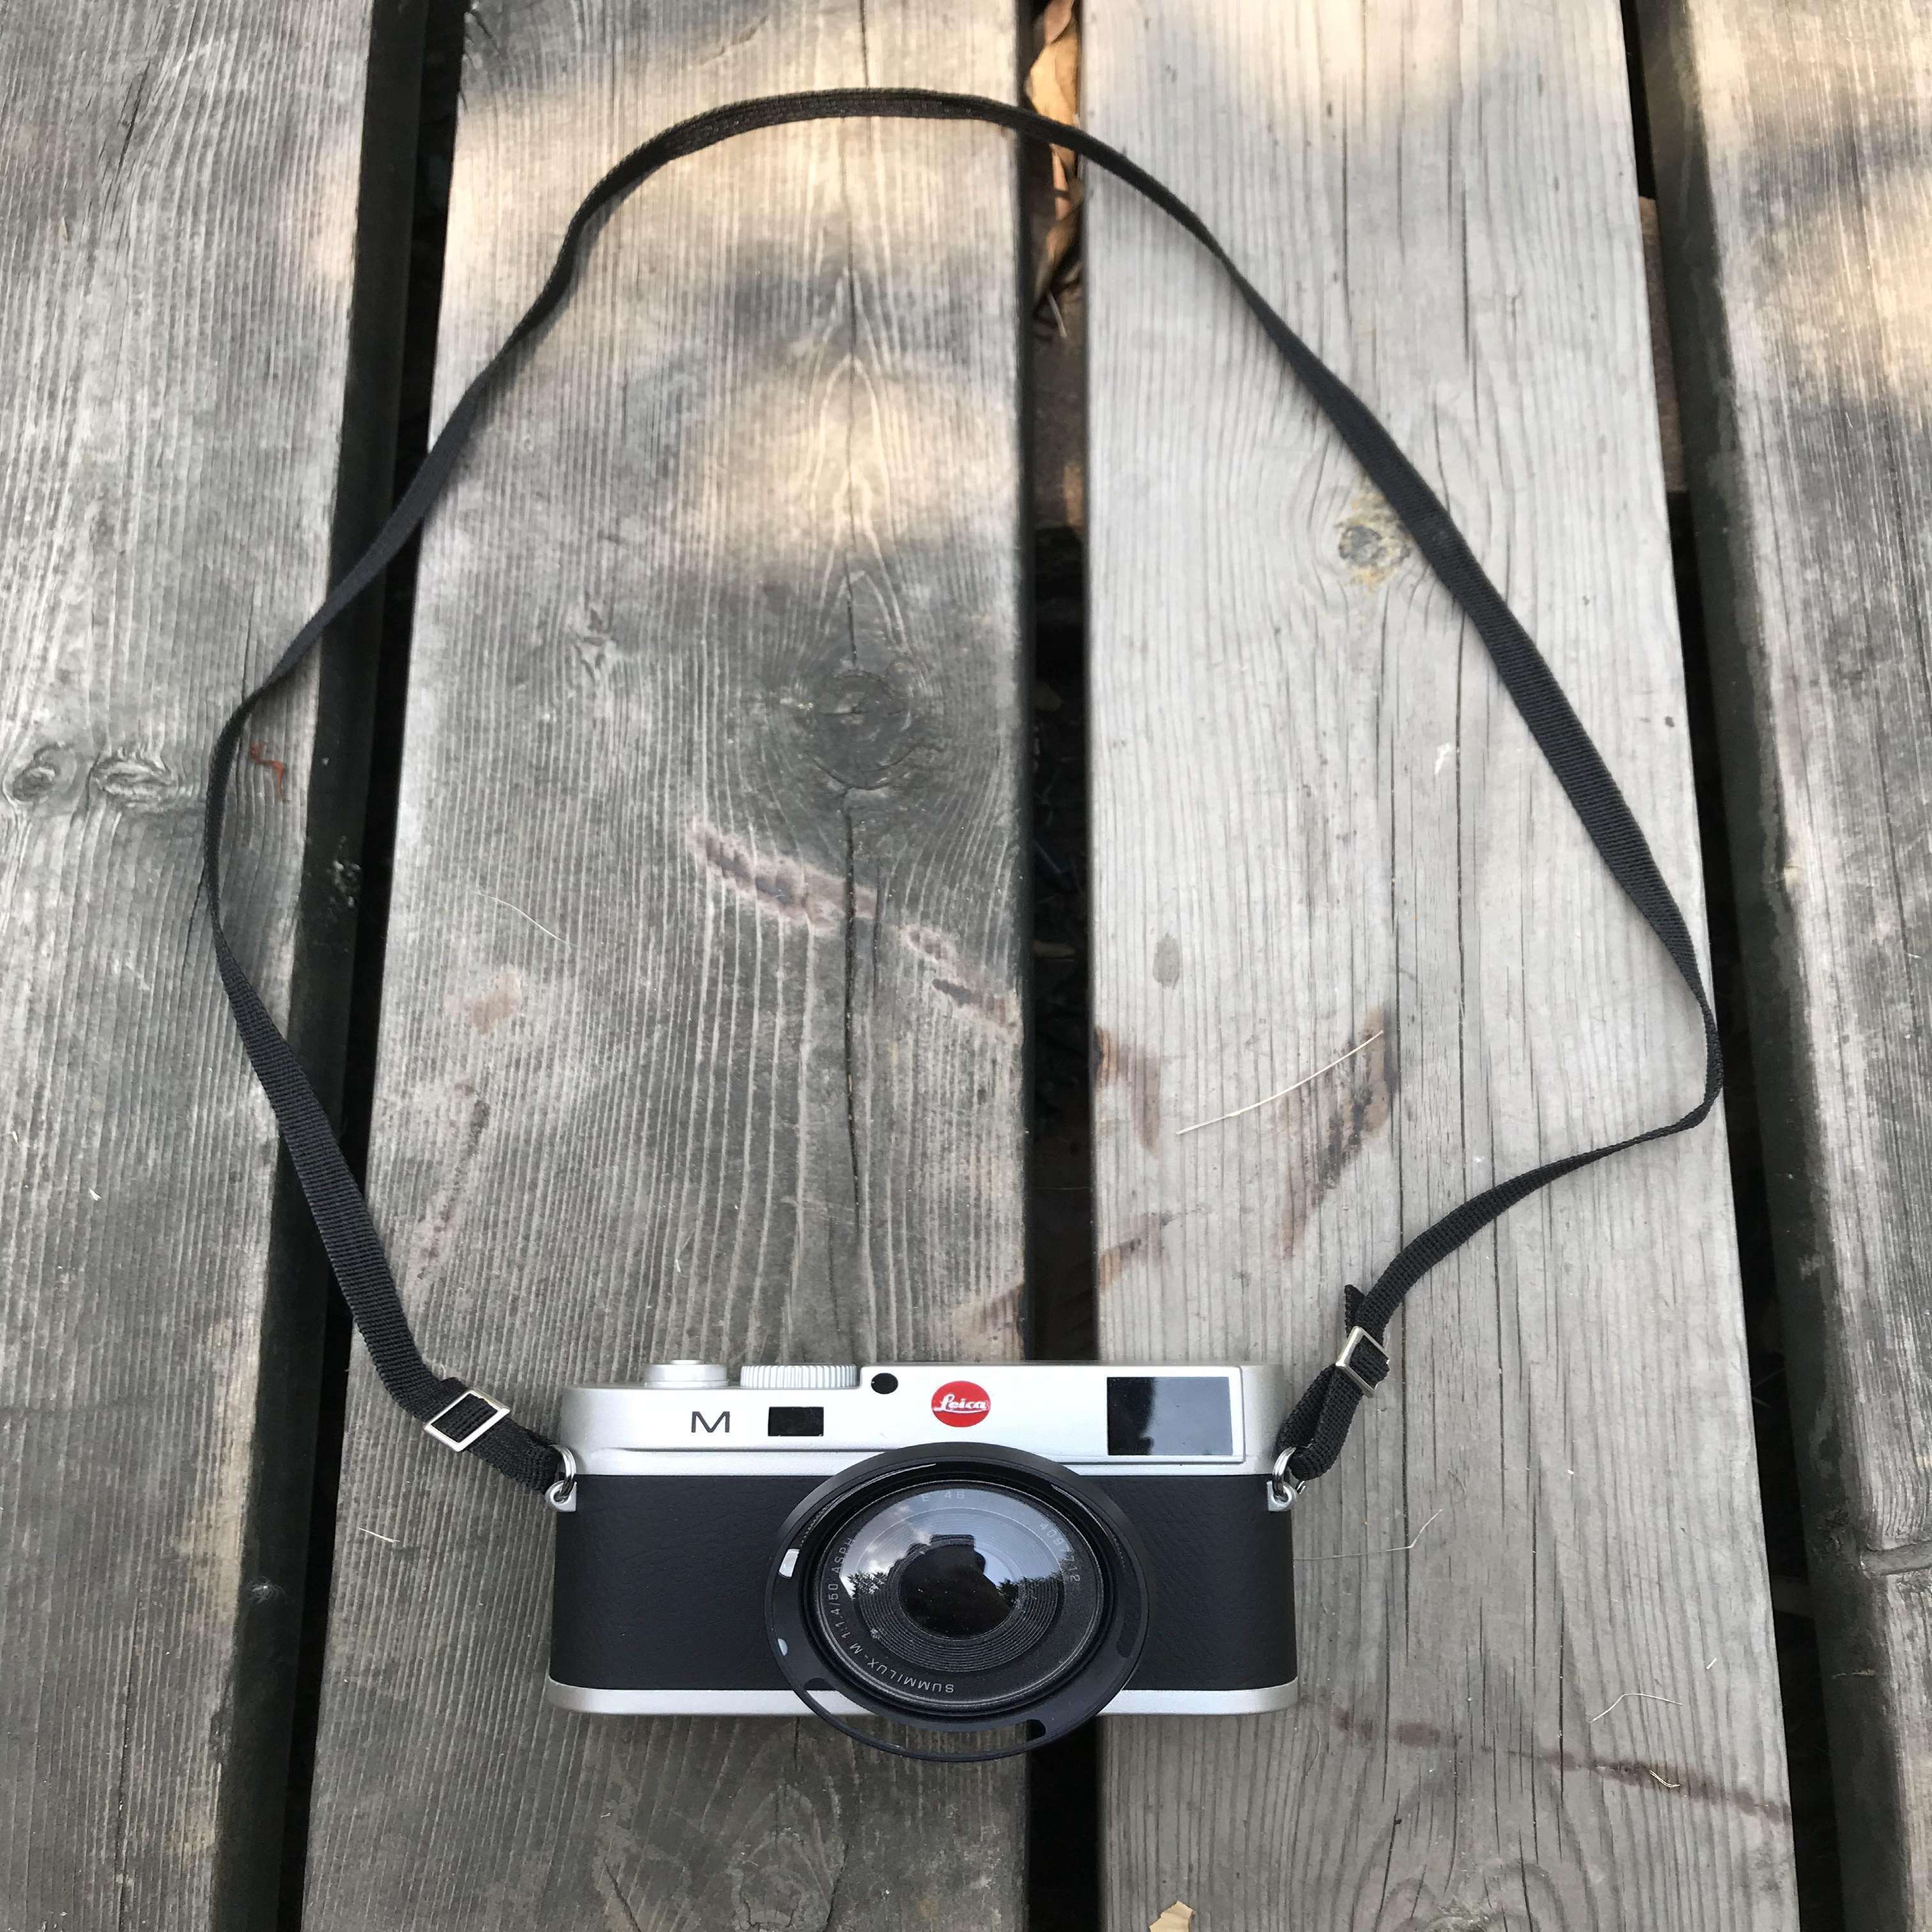 leicaกล้องรุ่นไมโครเดียวของเล่นเครื่องประดับย้อนยุคอุปกรณ์ถ่ายภาพศิลปะสตูดิโอเด็กอุปกรณ์ภาพ